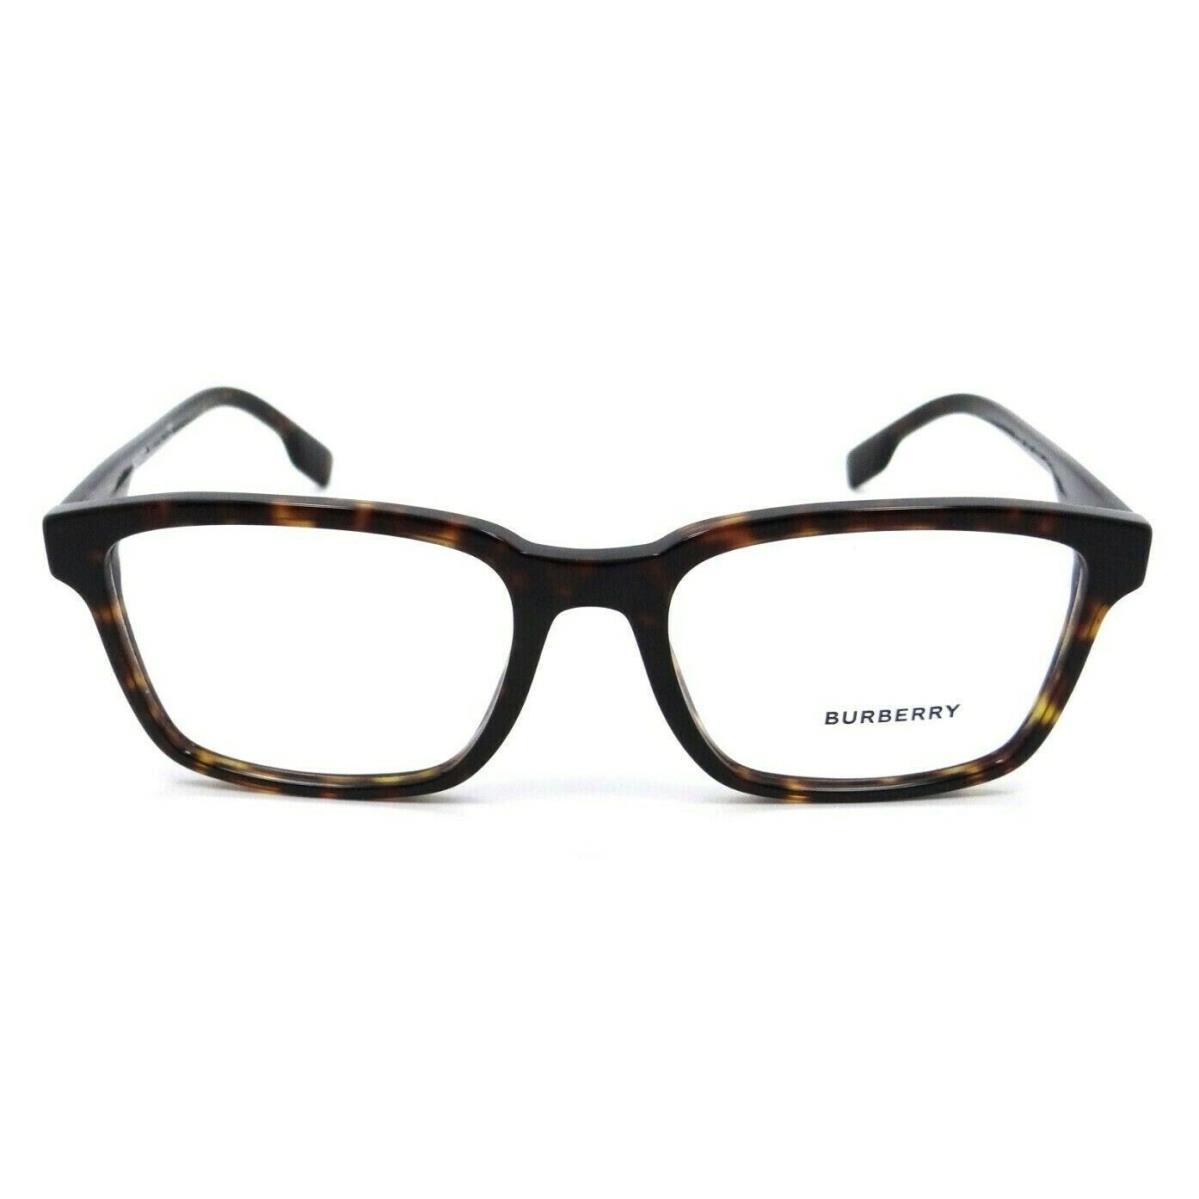 Burberry eyeglasses  - Multi-Color Frame 0